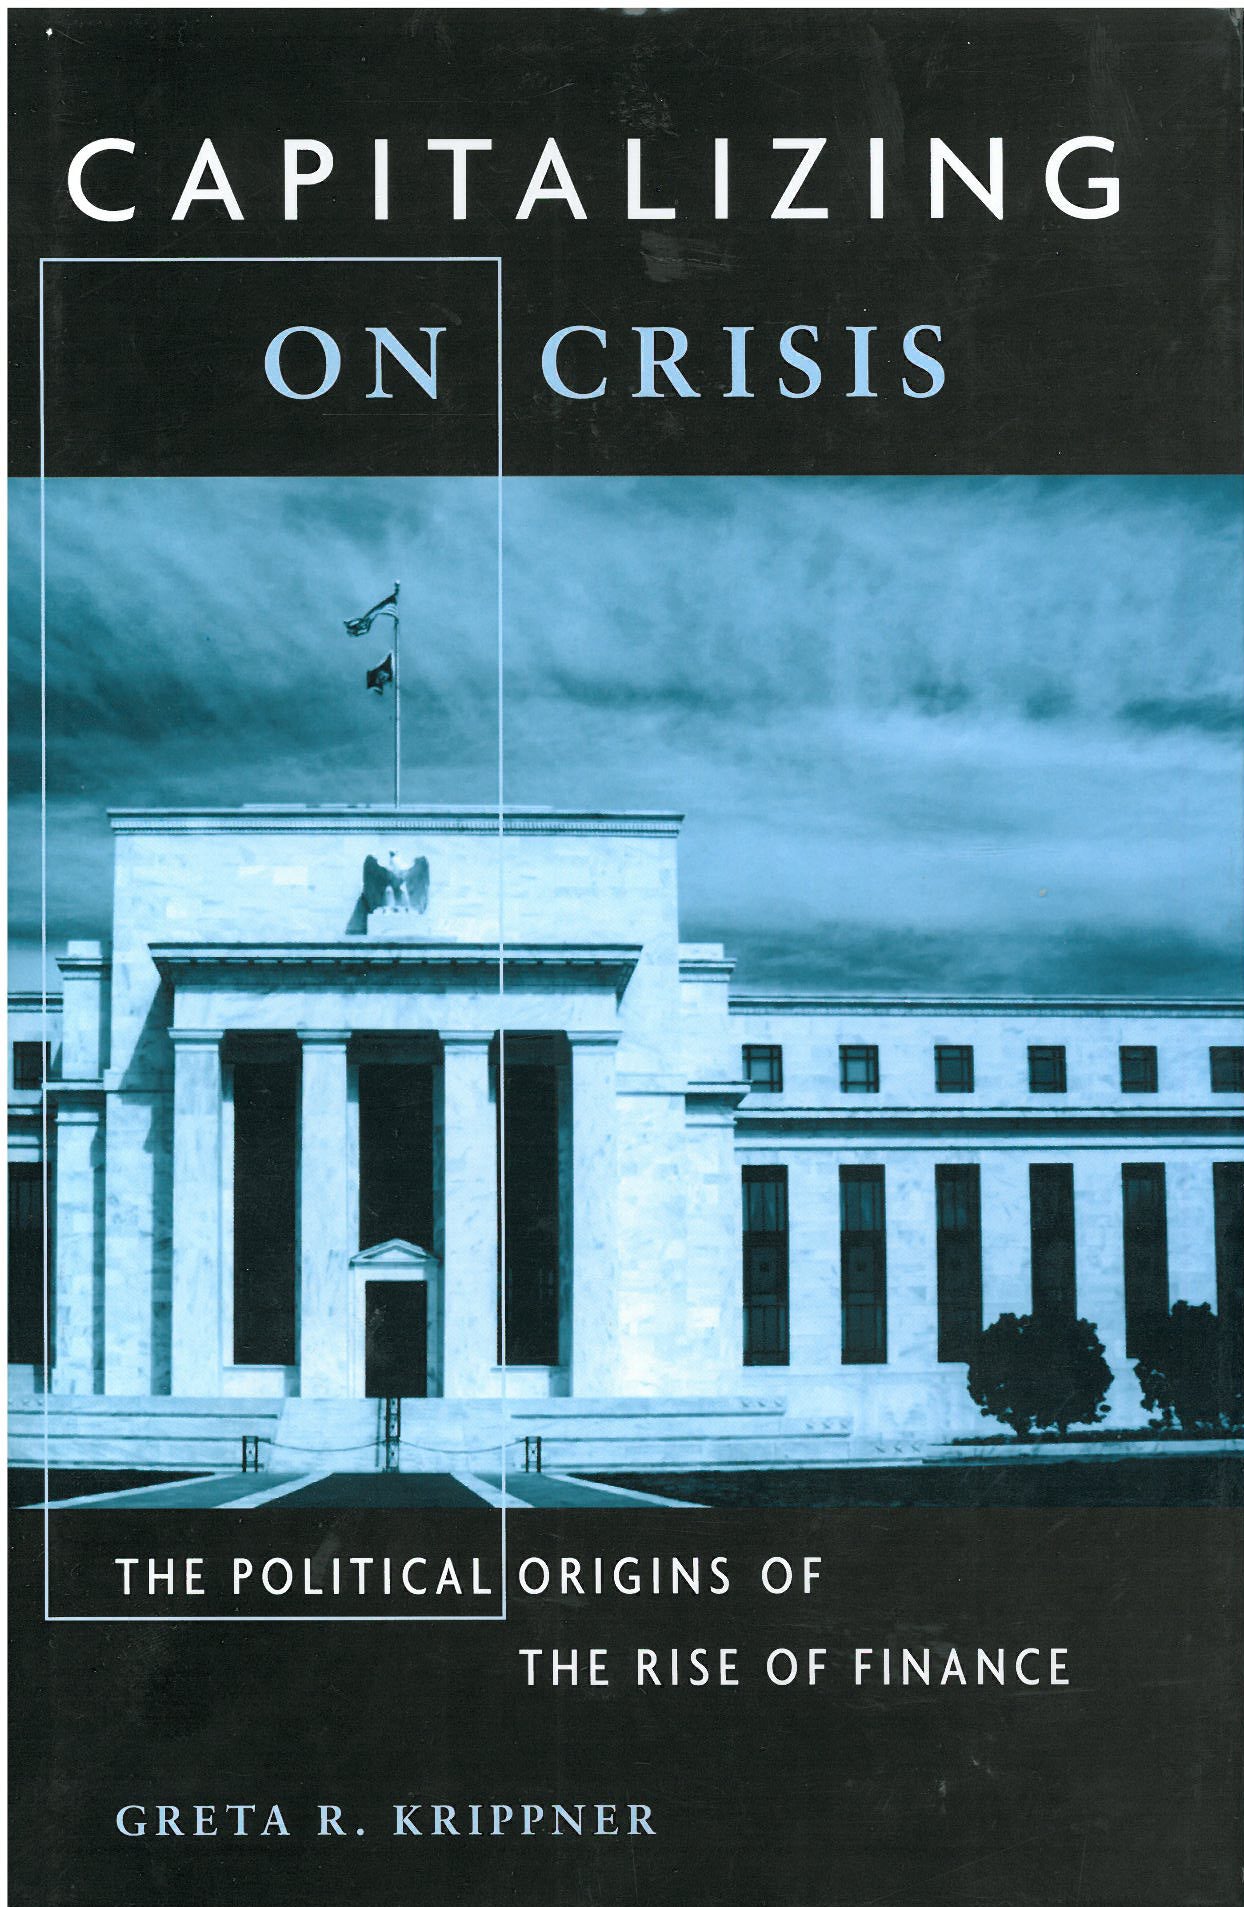 krippner book cover, capitalizing on crisis